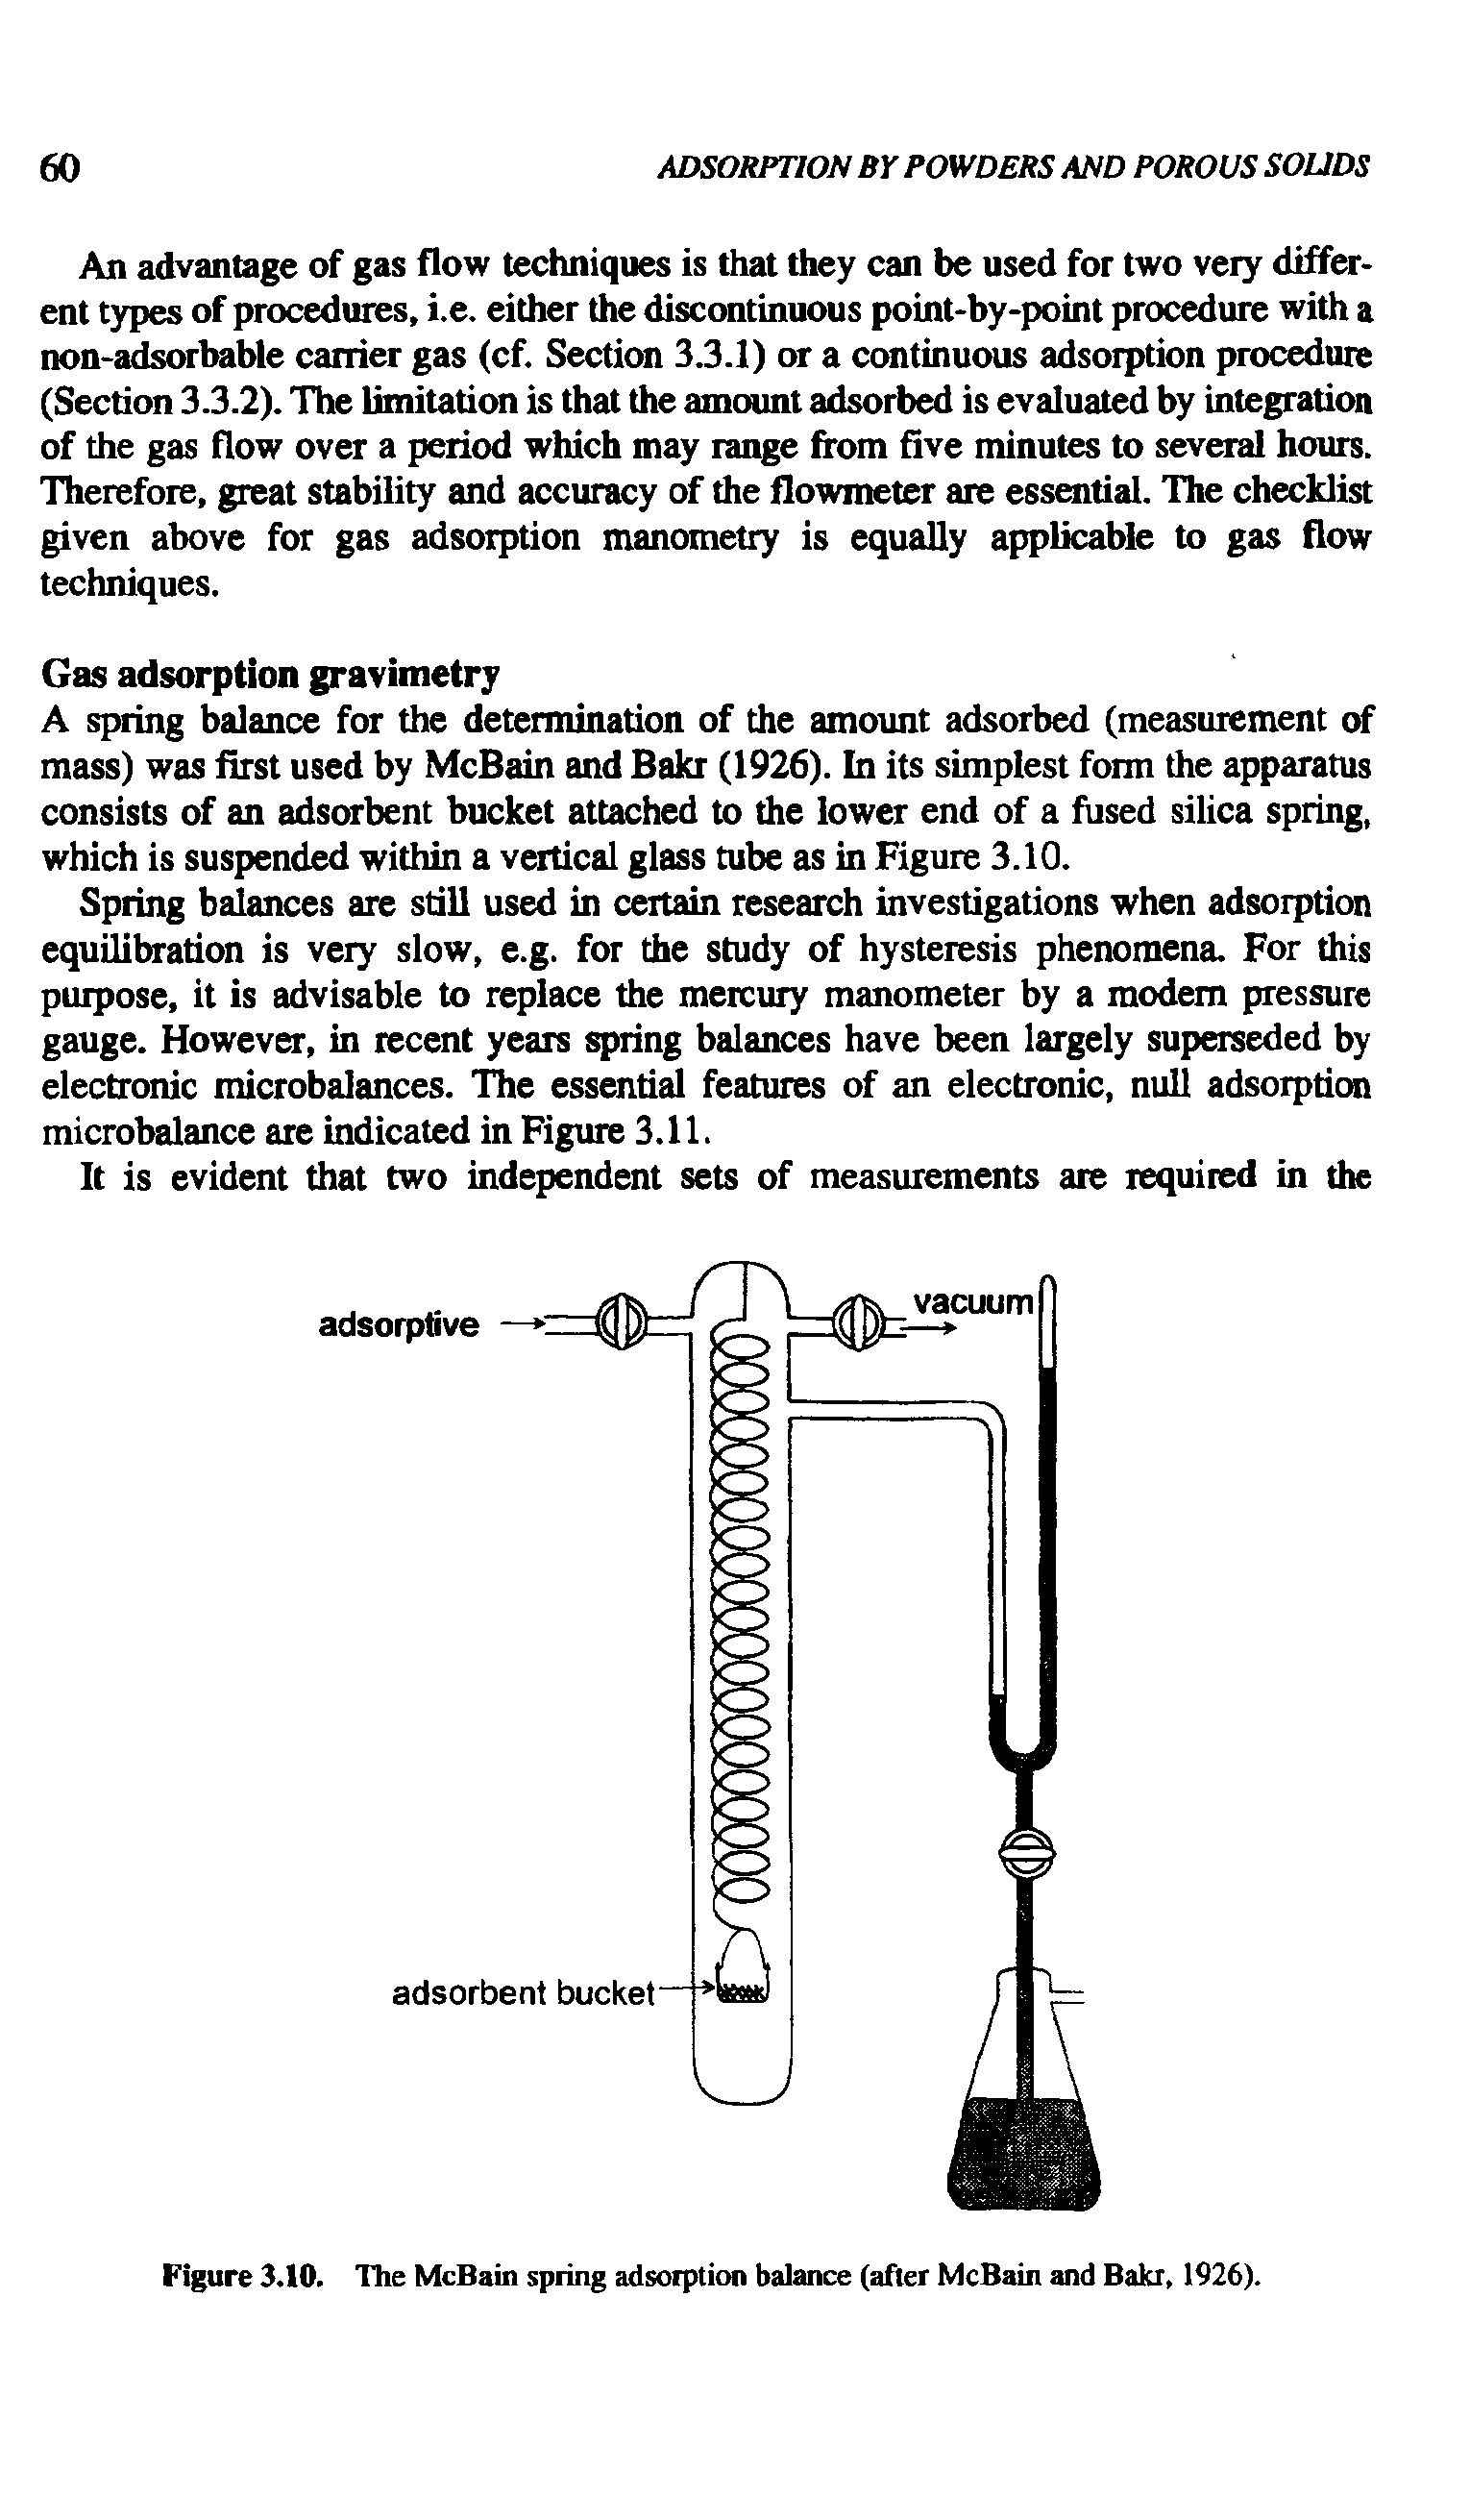 Figure 3.10. The McBain spring adsorption balance (after McBain and Bakr, 1926).